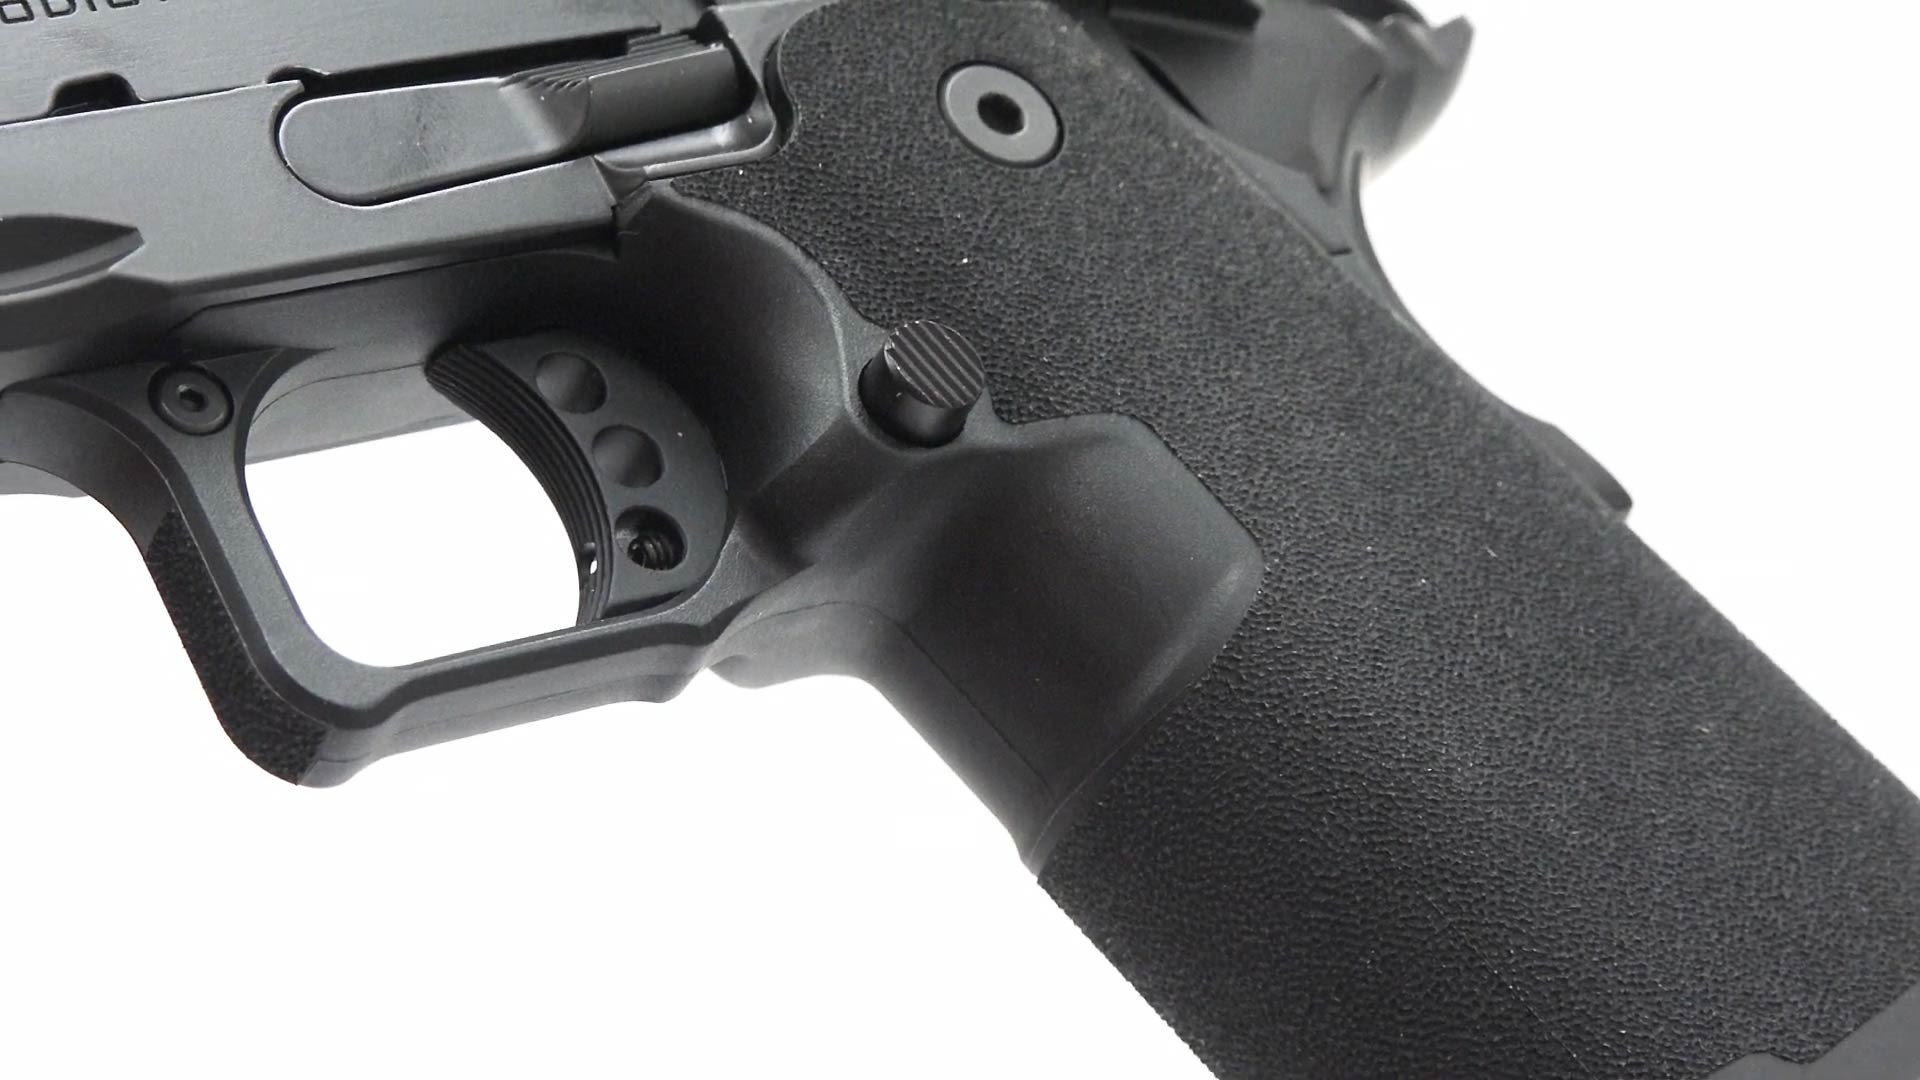 Springfield Armory Prodigy details frame trigger grip magazine release gun pistol 9 mm